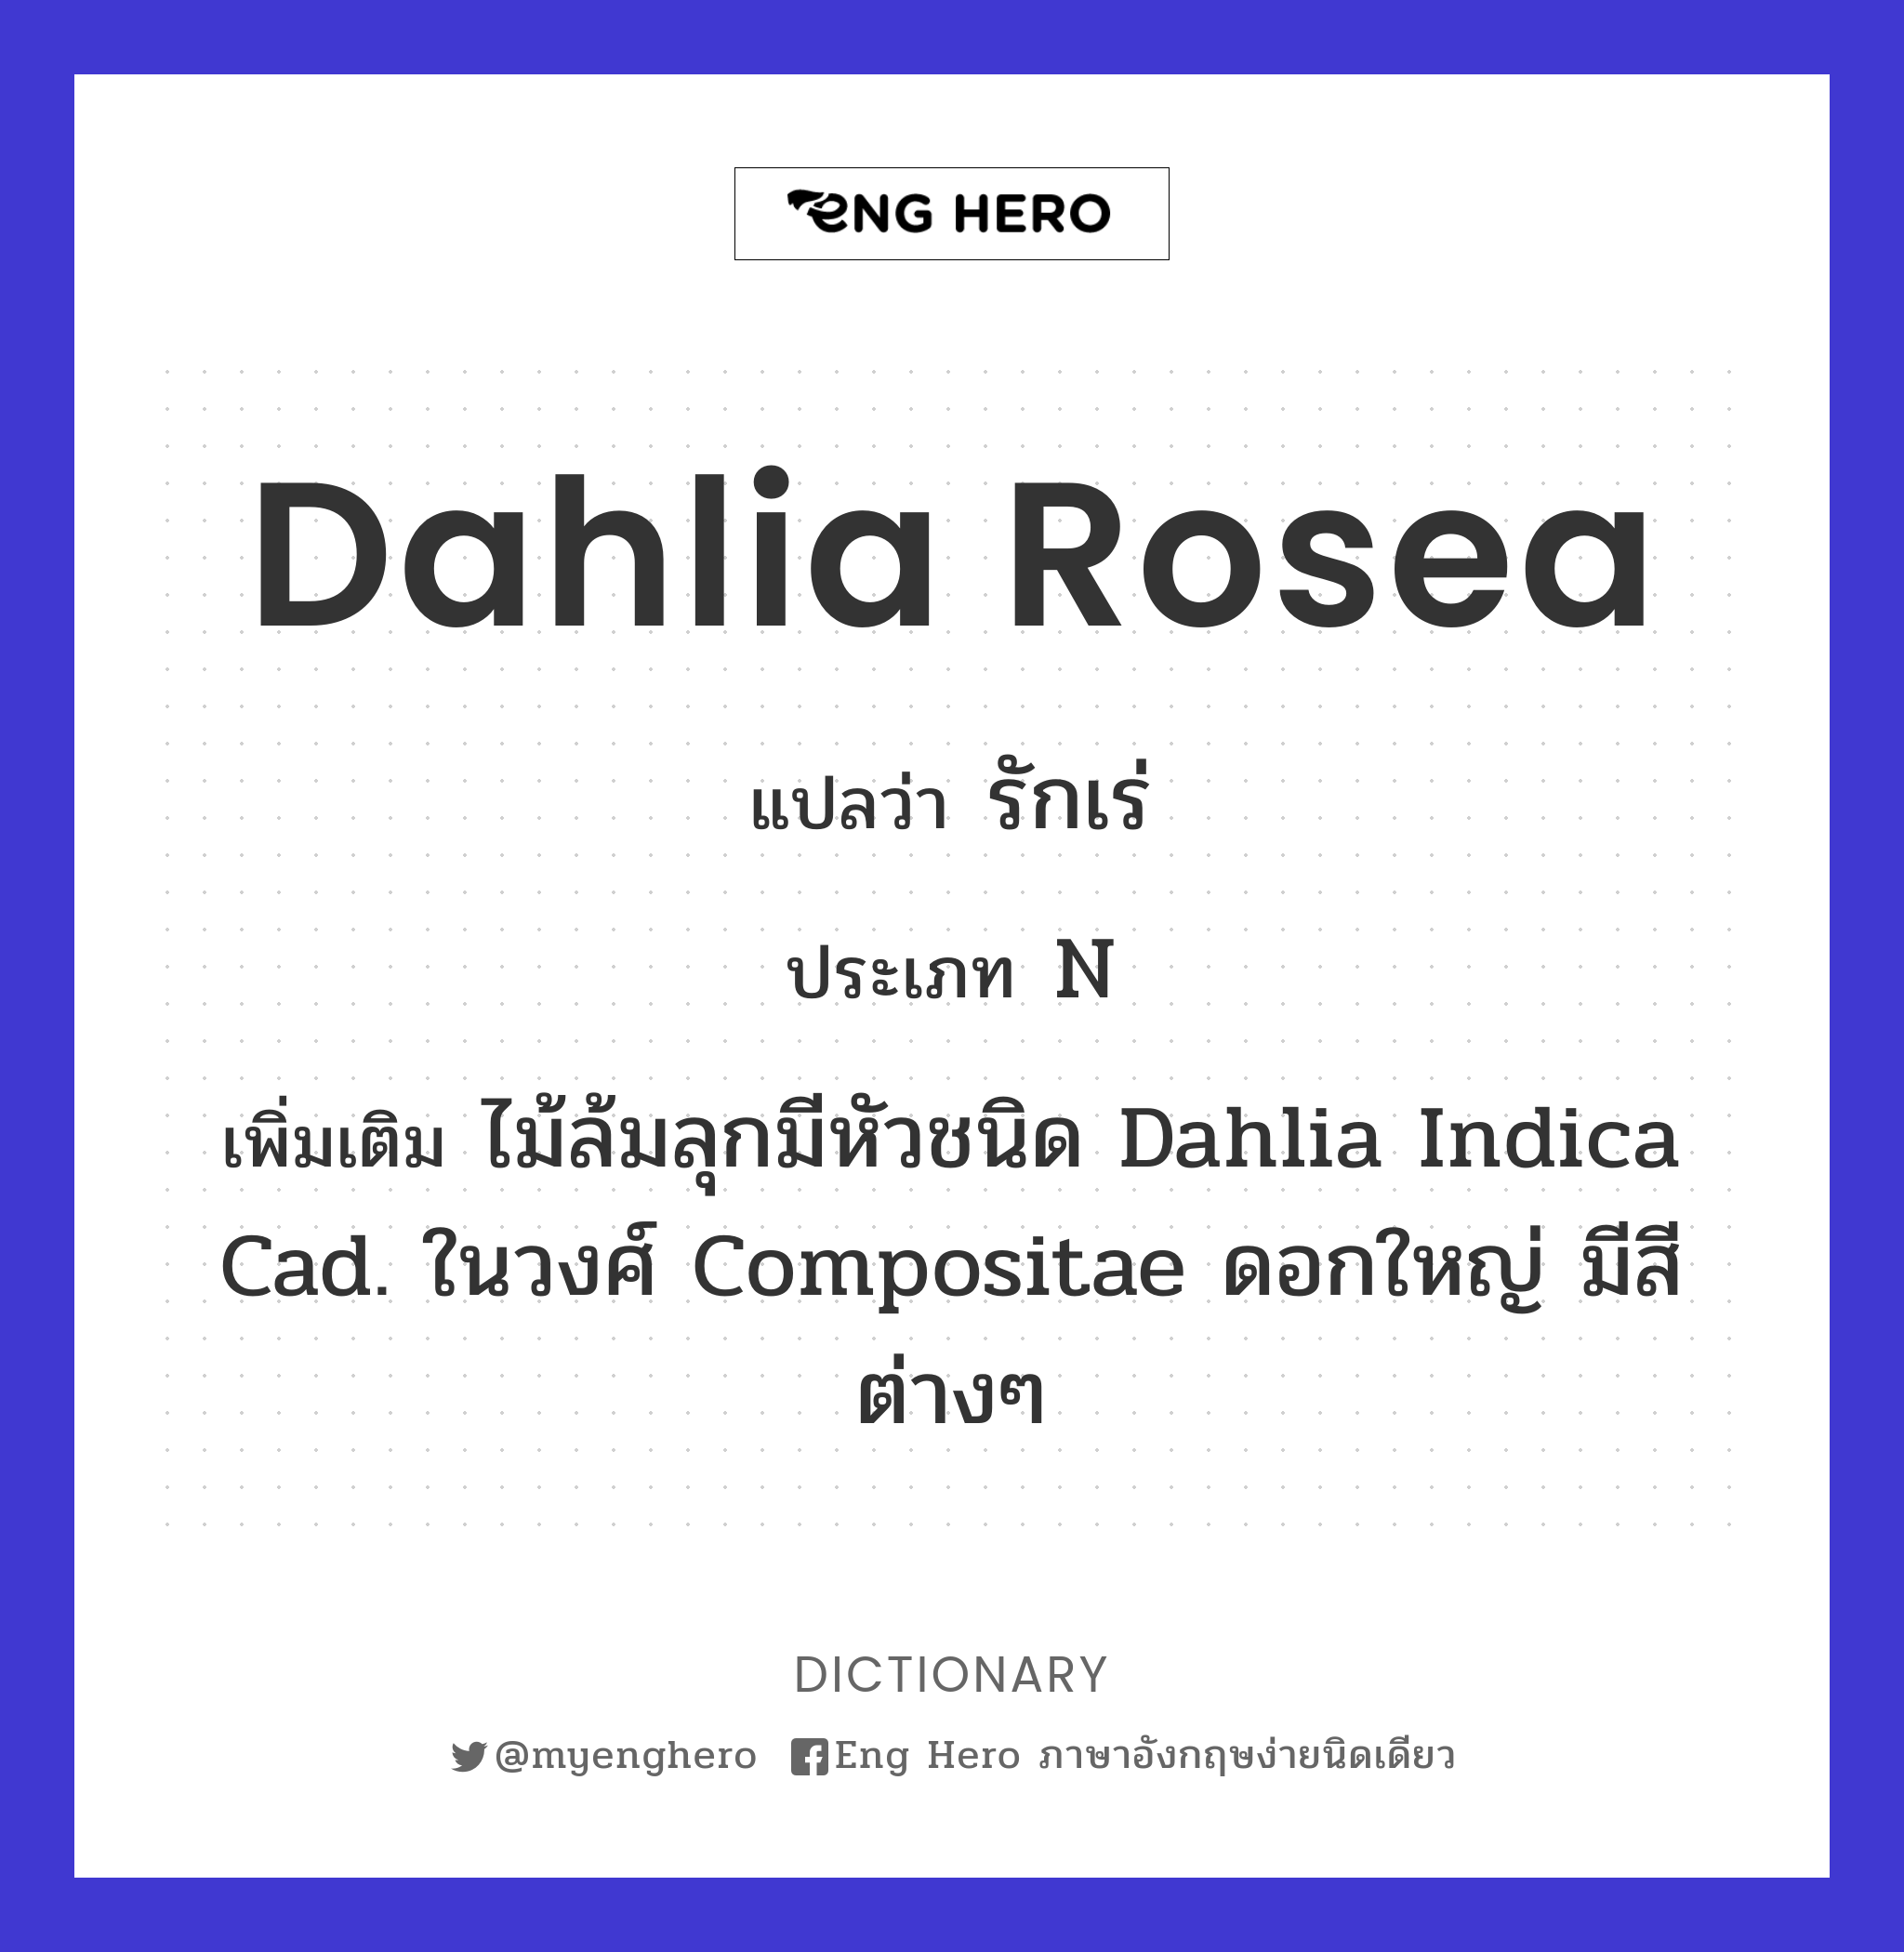 Dahlia rosea